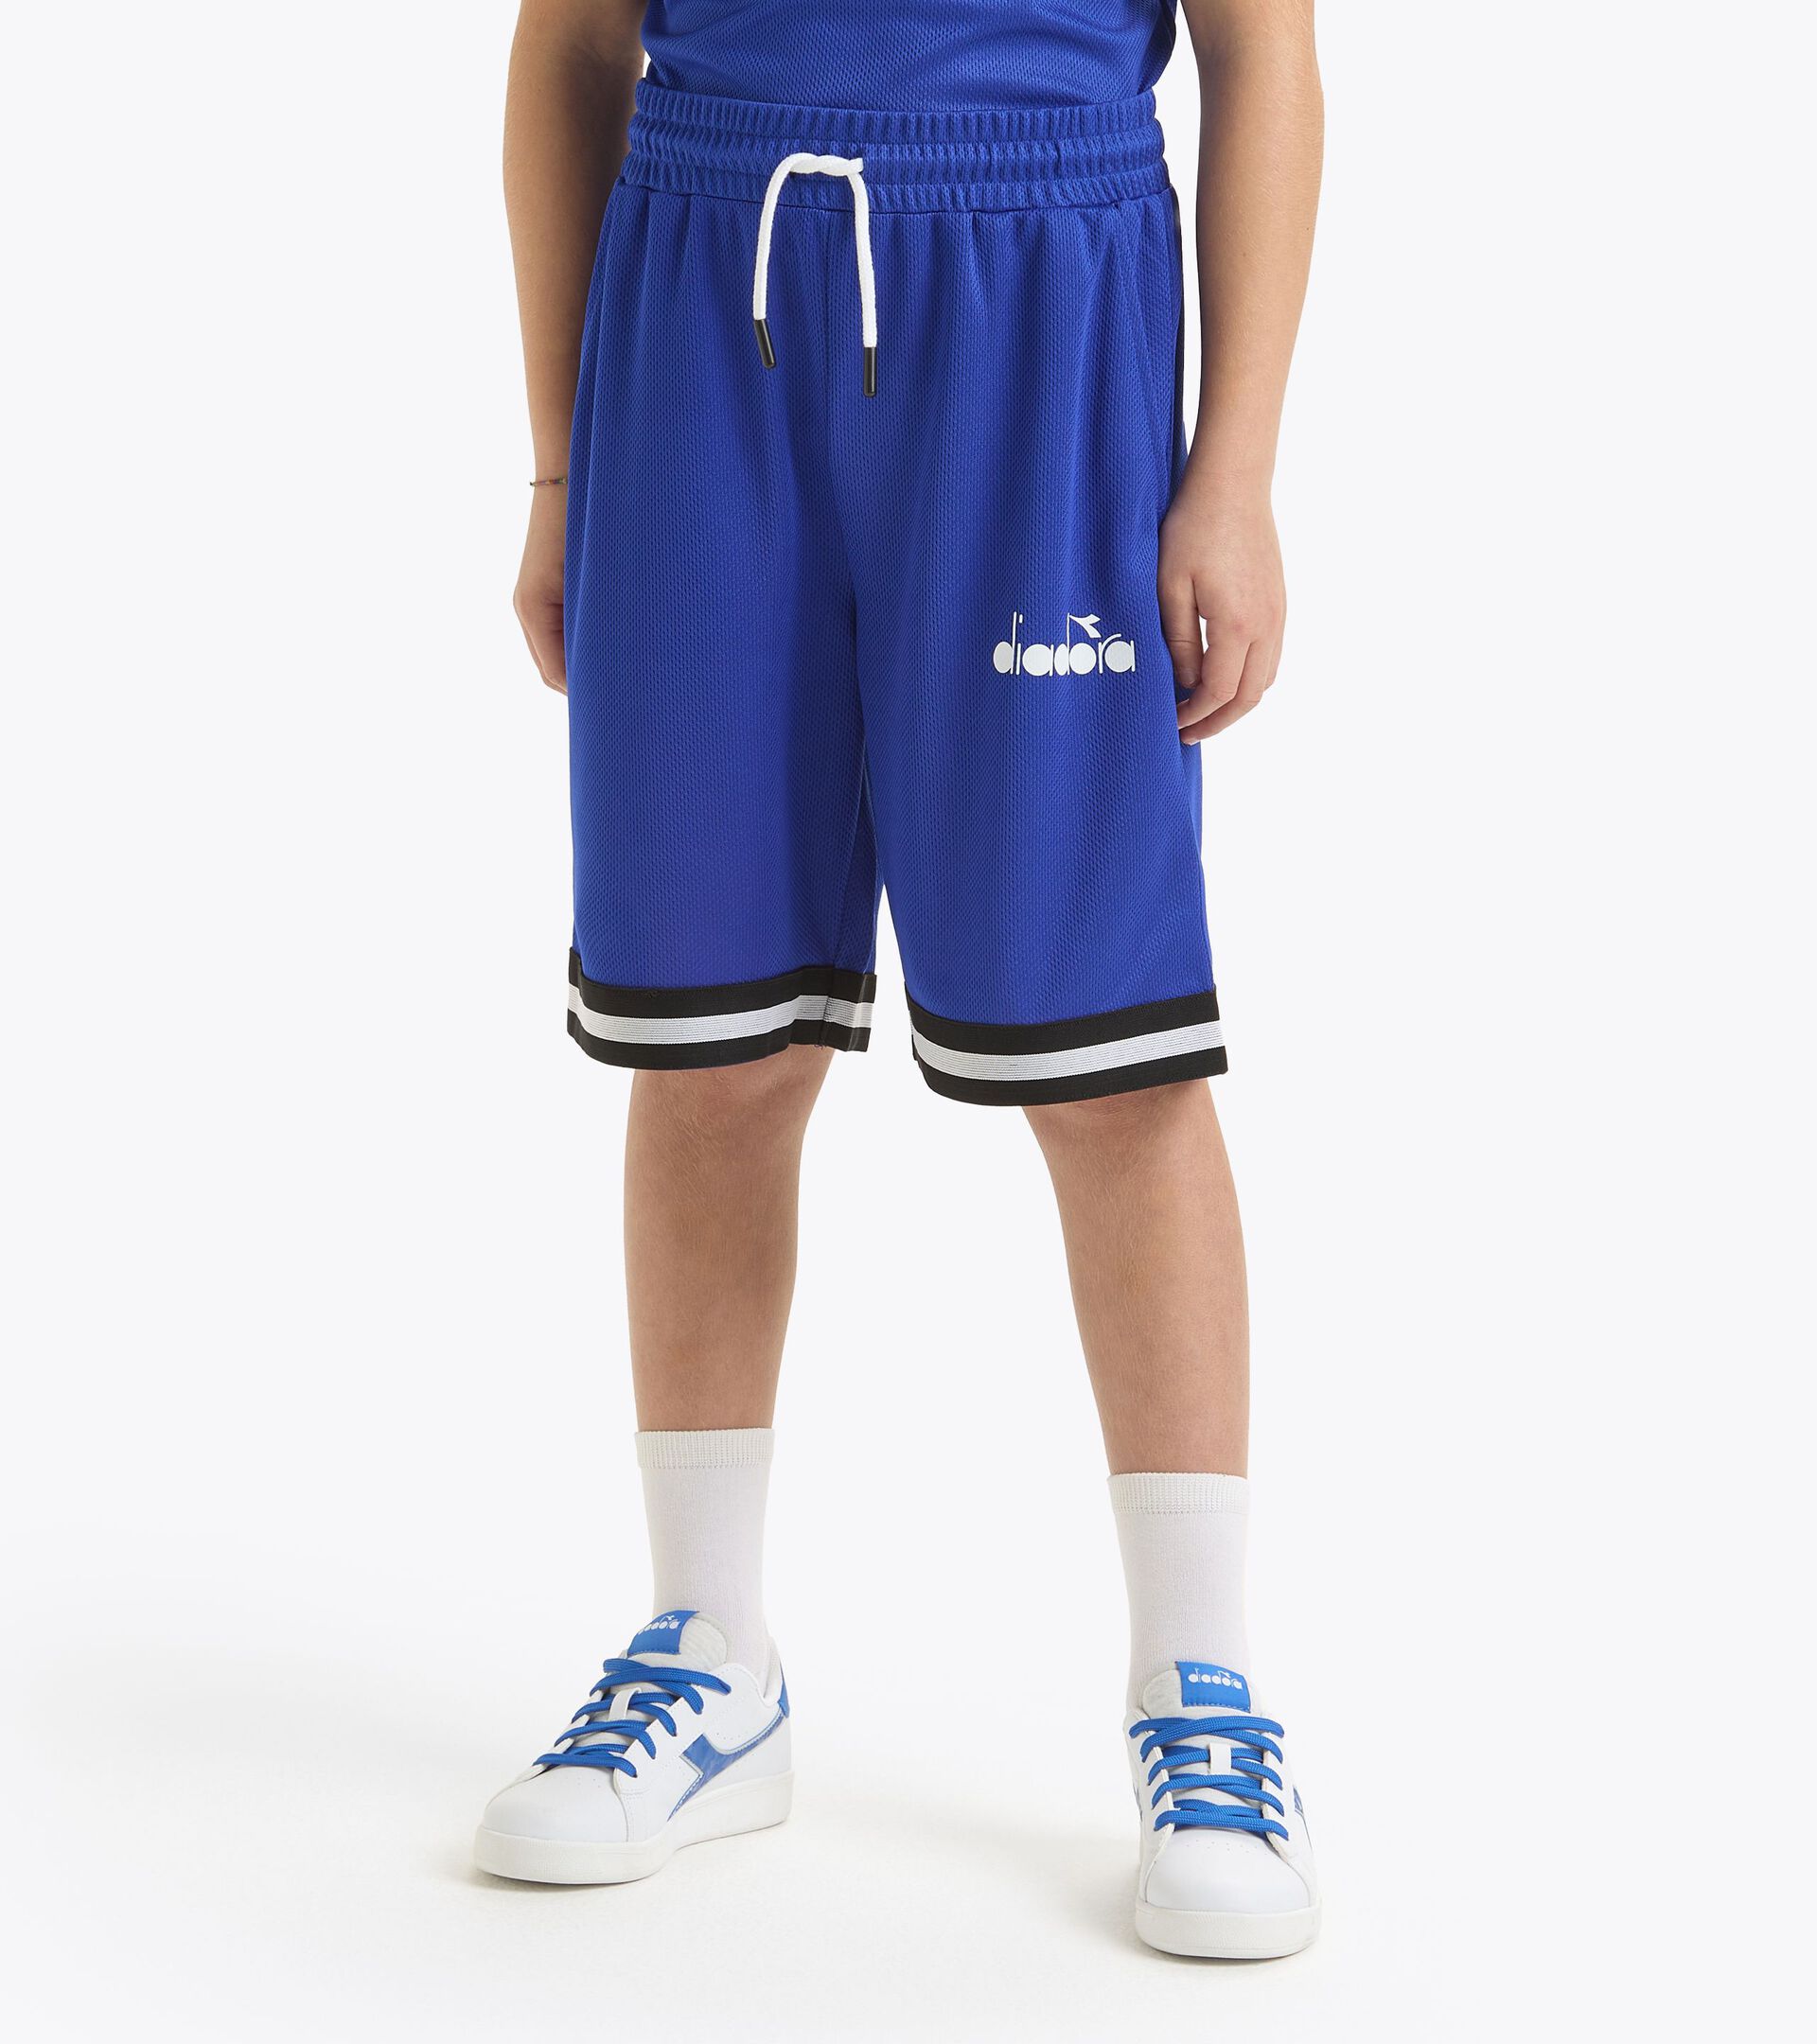 Bermuda shorts - Boy
 JB.  BERMUDA BASKETBALL ROYAL BLUE - Diadora